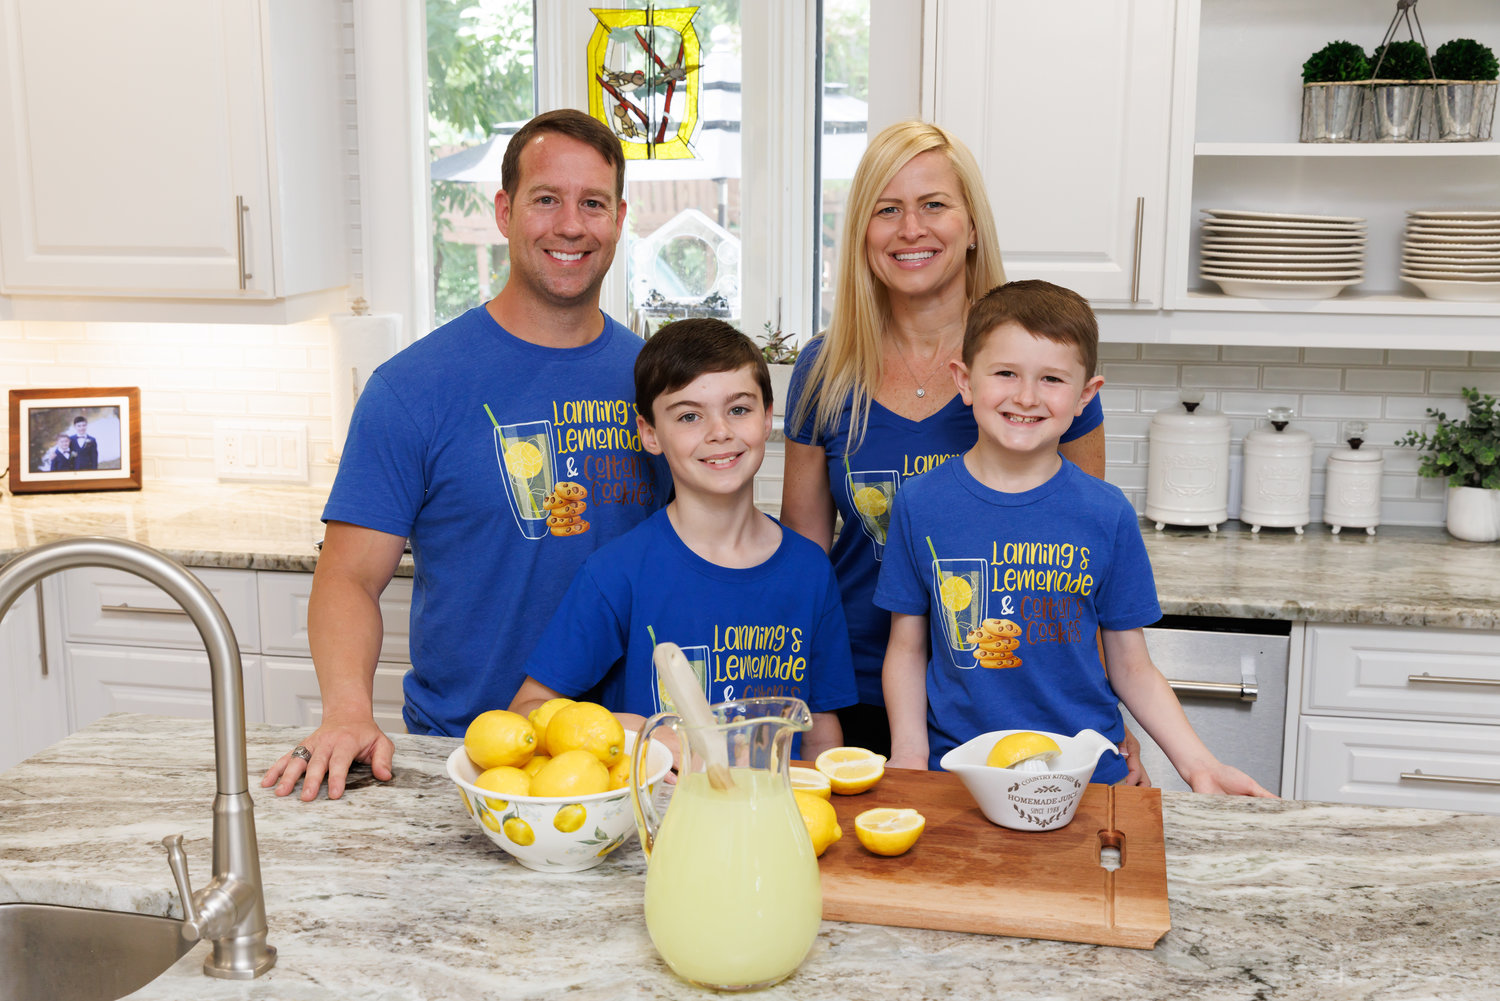 Lanning Kistler’s lemonade stand was rebranded as Lanning’s Lemonade & Colton’s Cookies after his dad, John Kistler, married Jennifer Walters, Colton's mother, in 2019.